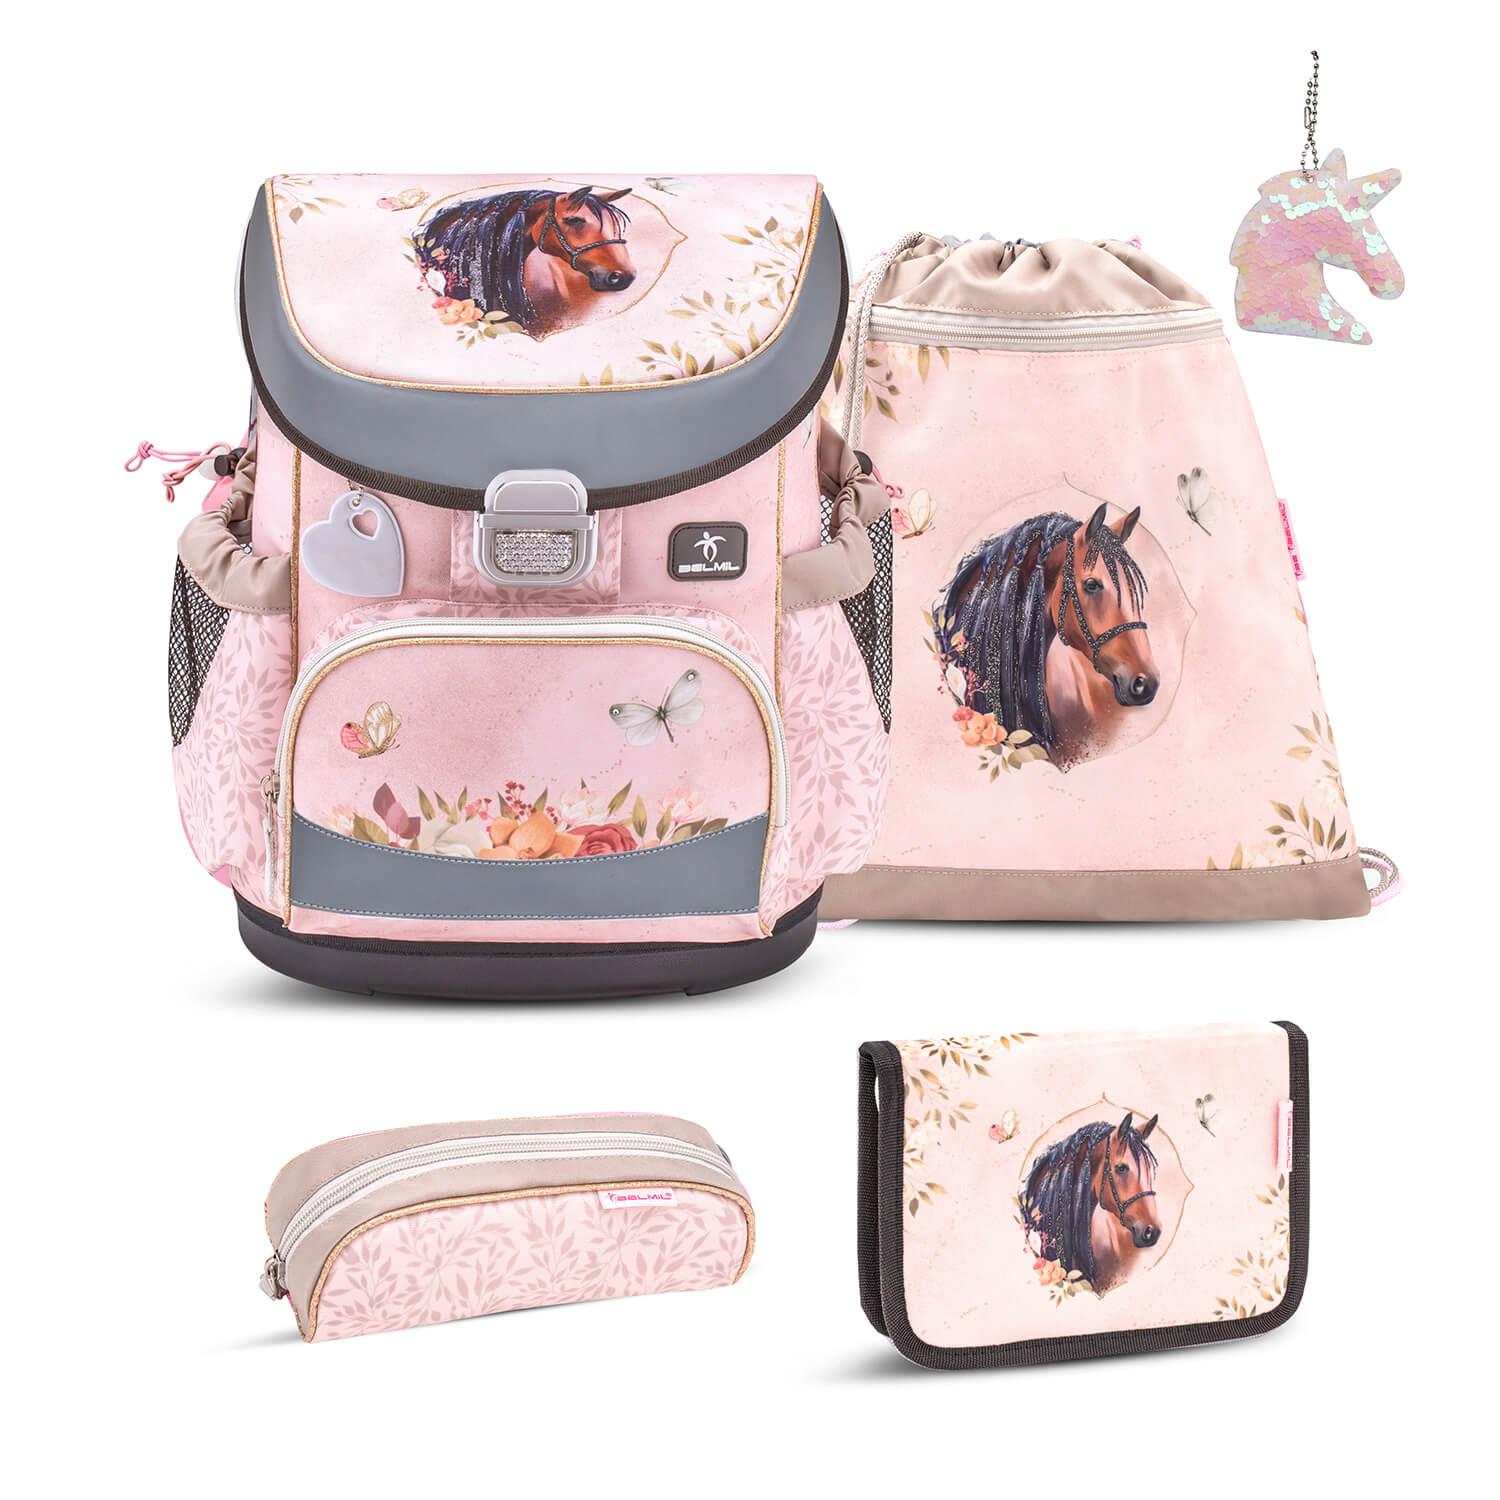 Mini-Fit Horse Chestnut schoolbag set 5 pcs with GRATIS keychain